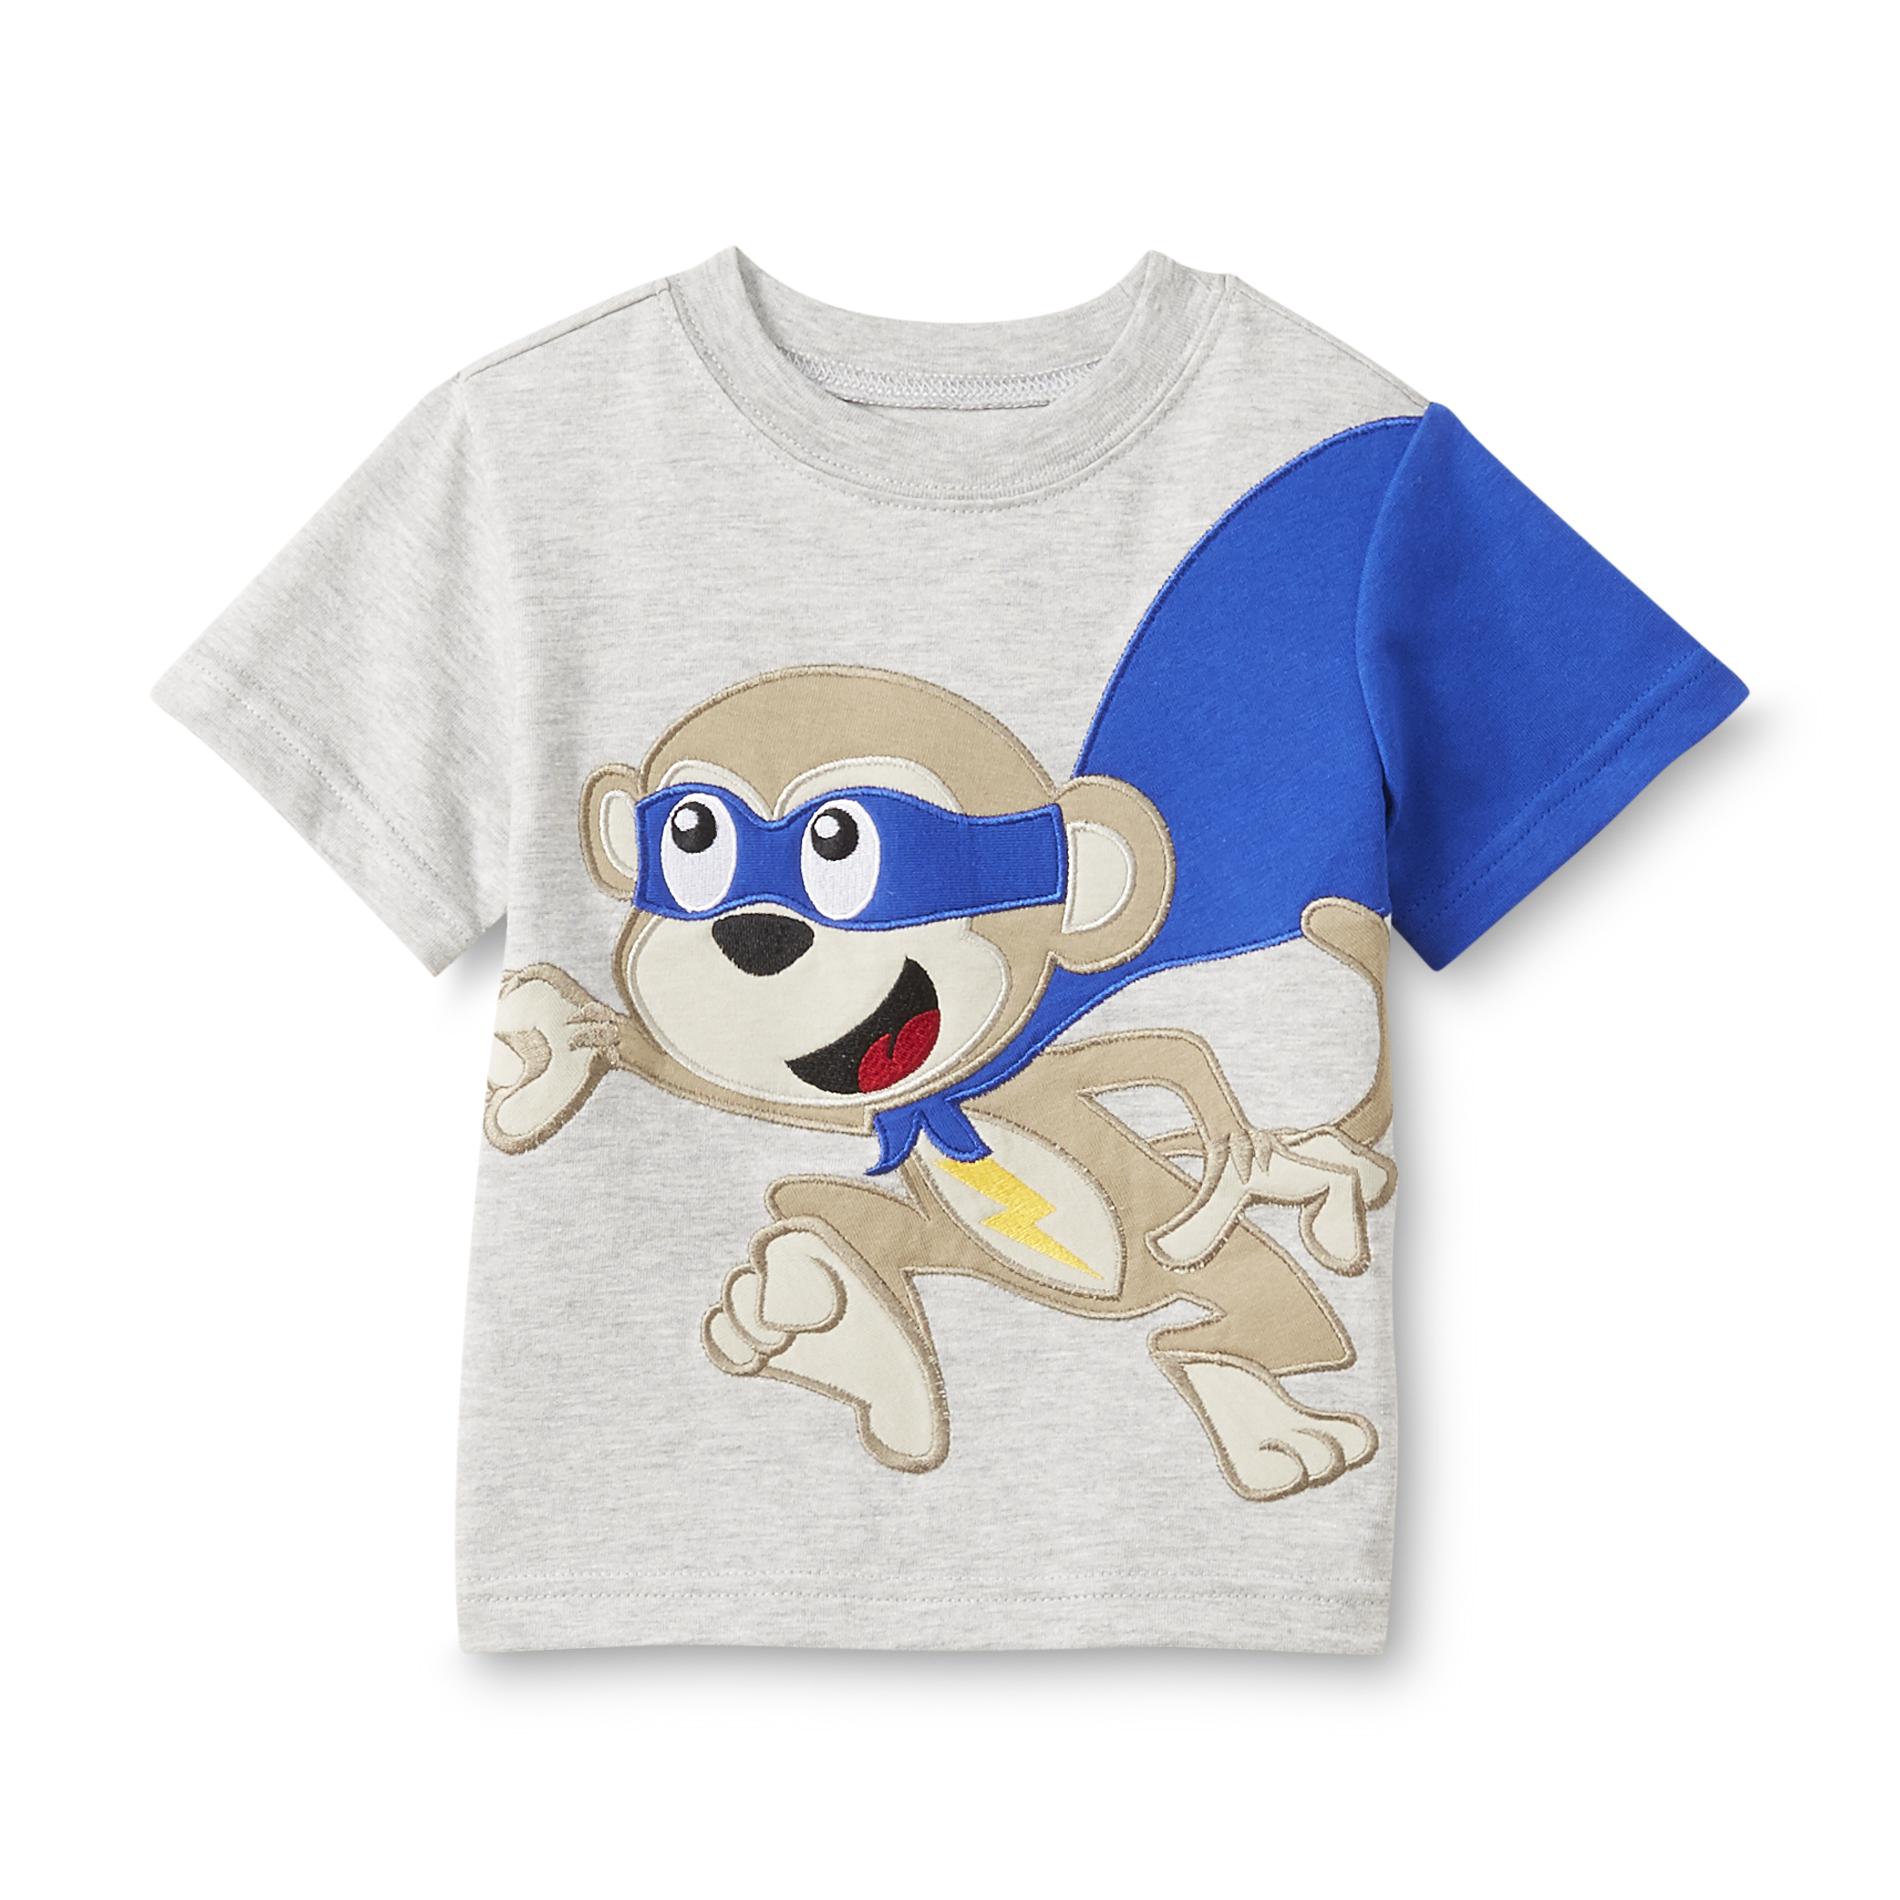 WonderKids Infant & Toddler Boy's Applique T-Shirt - Super Monkey